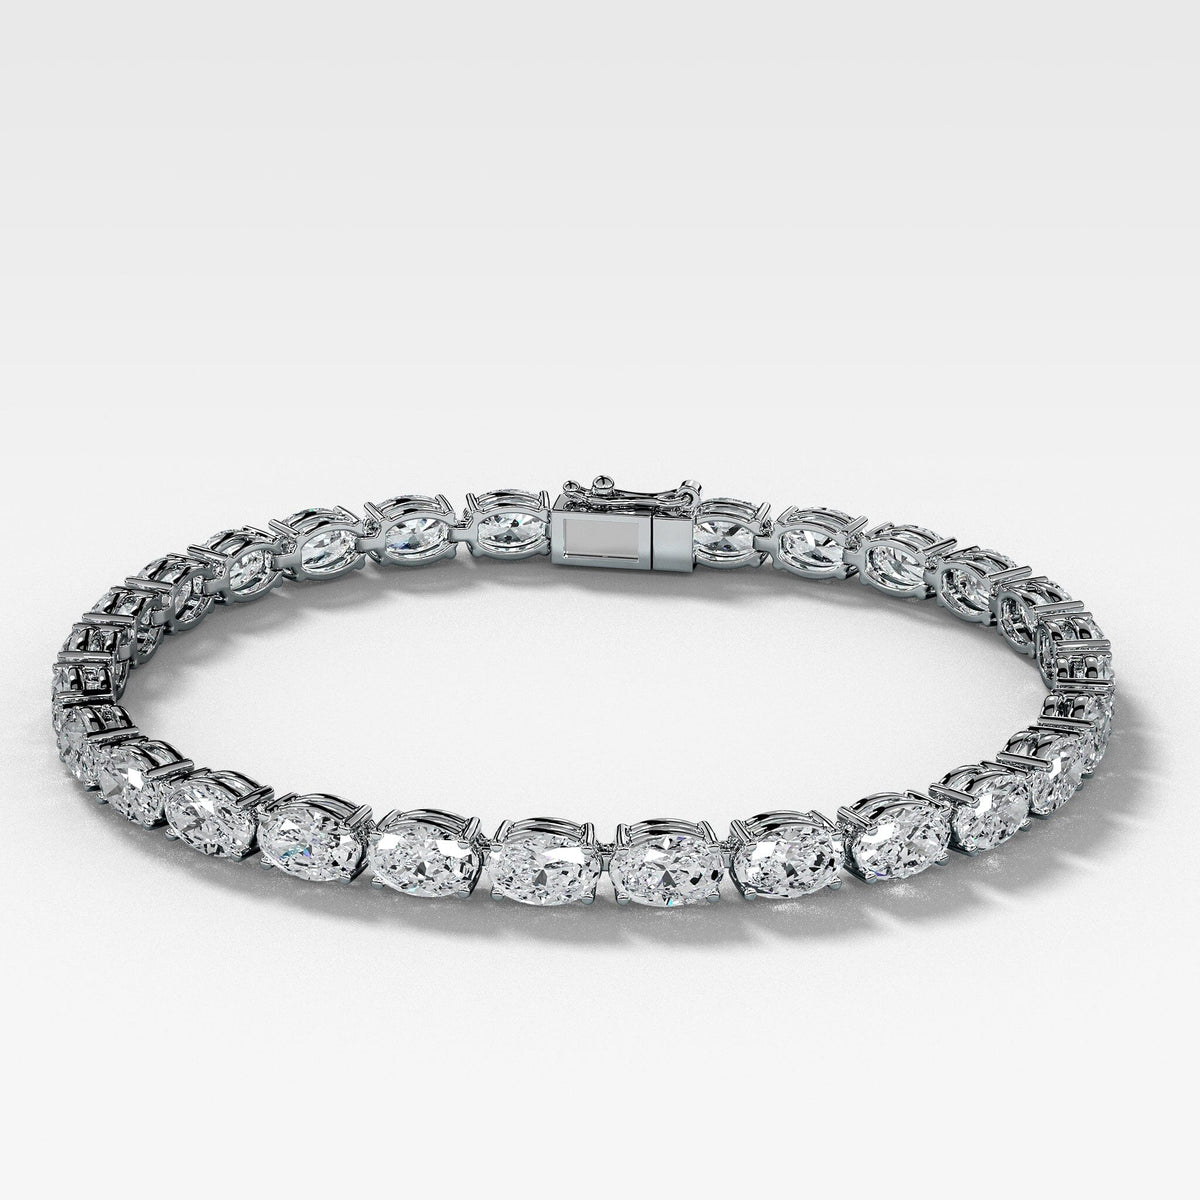 Shop PAVOI's Medium Tennis Bracelet | Affordable Bracelet | Looks Real